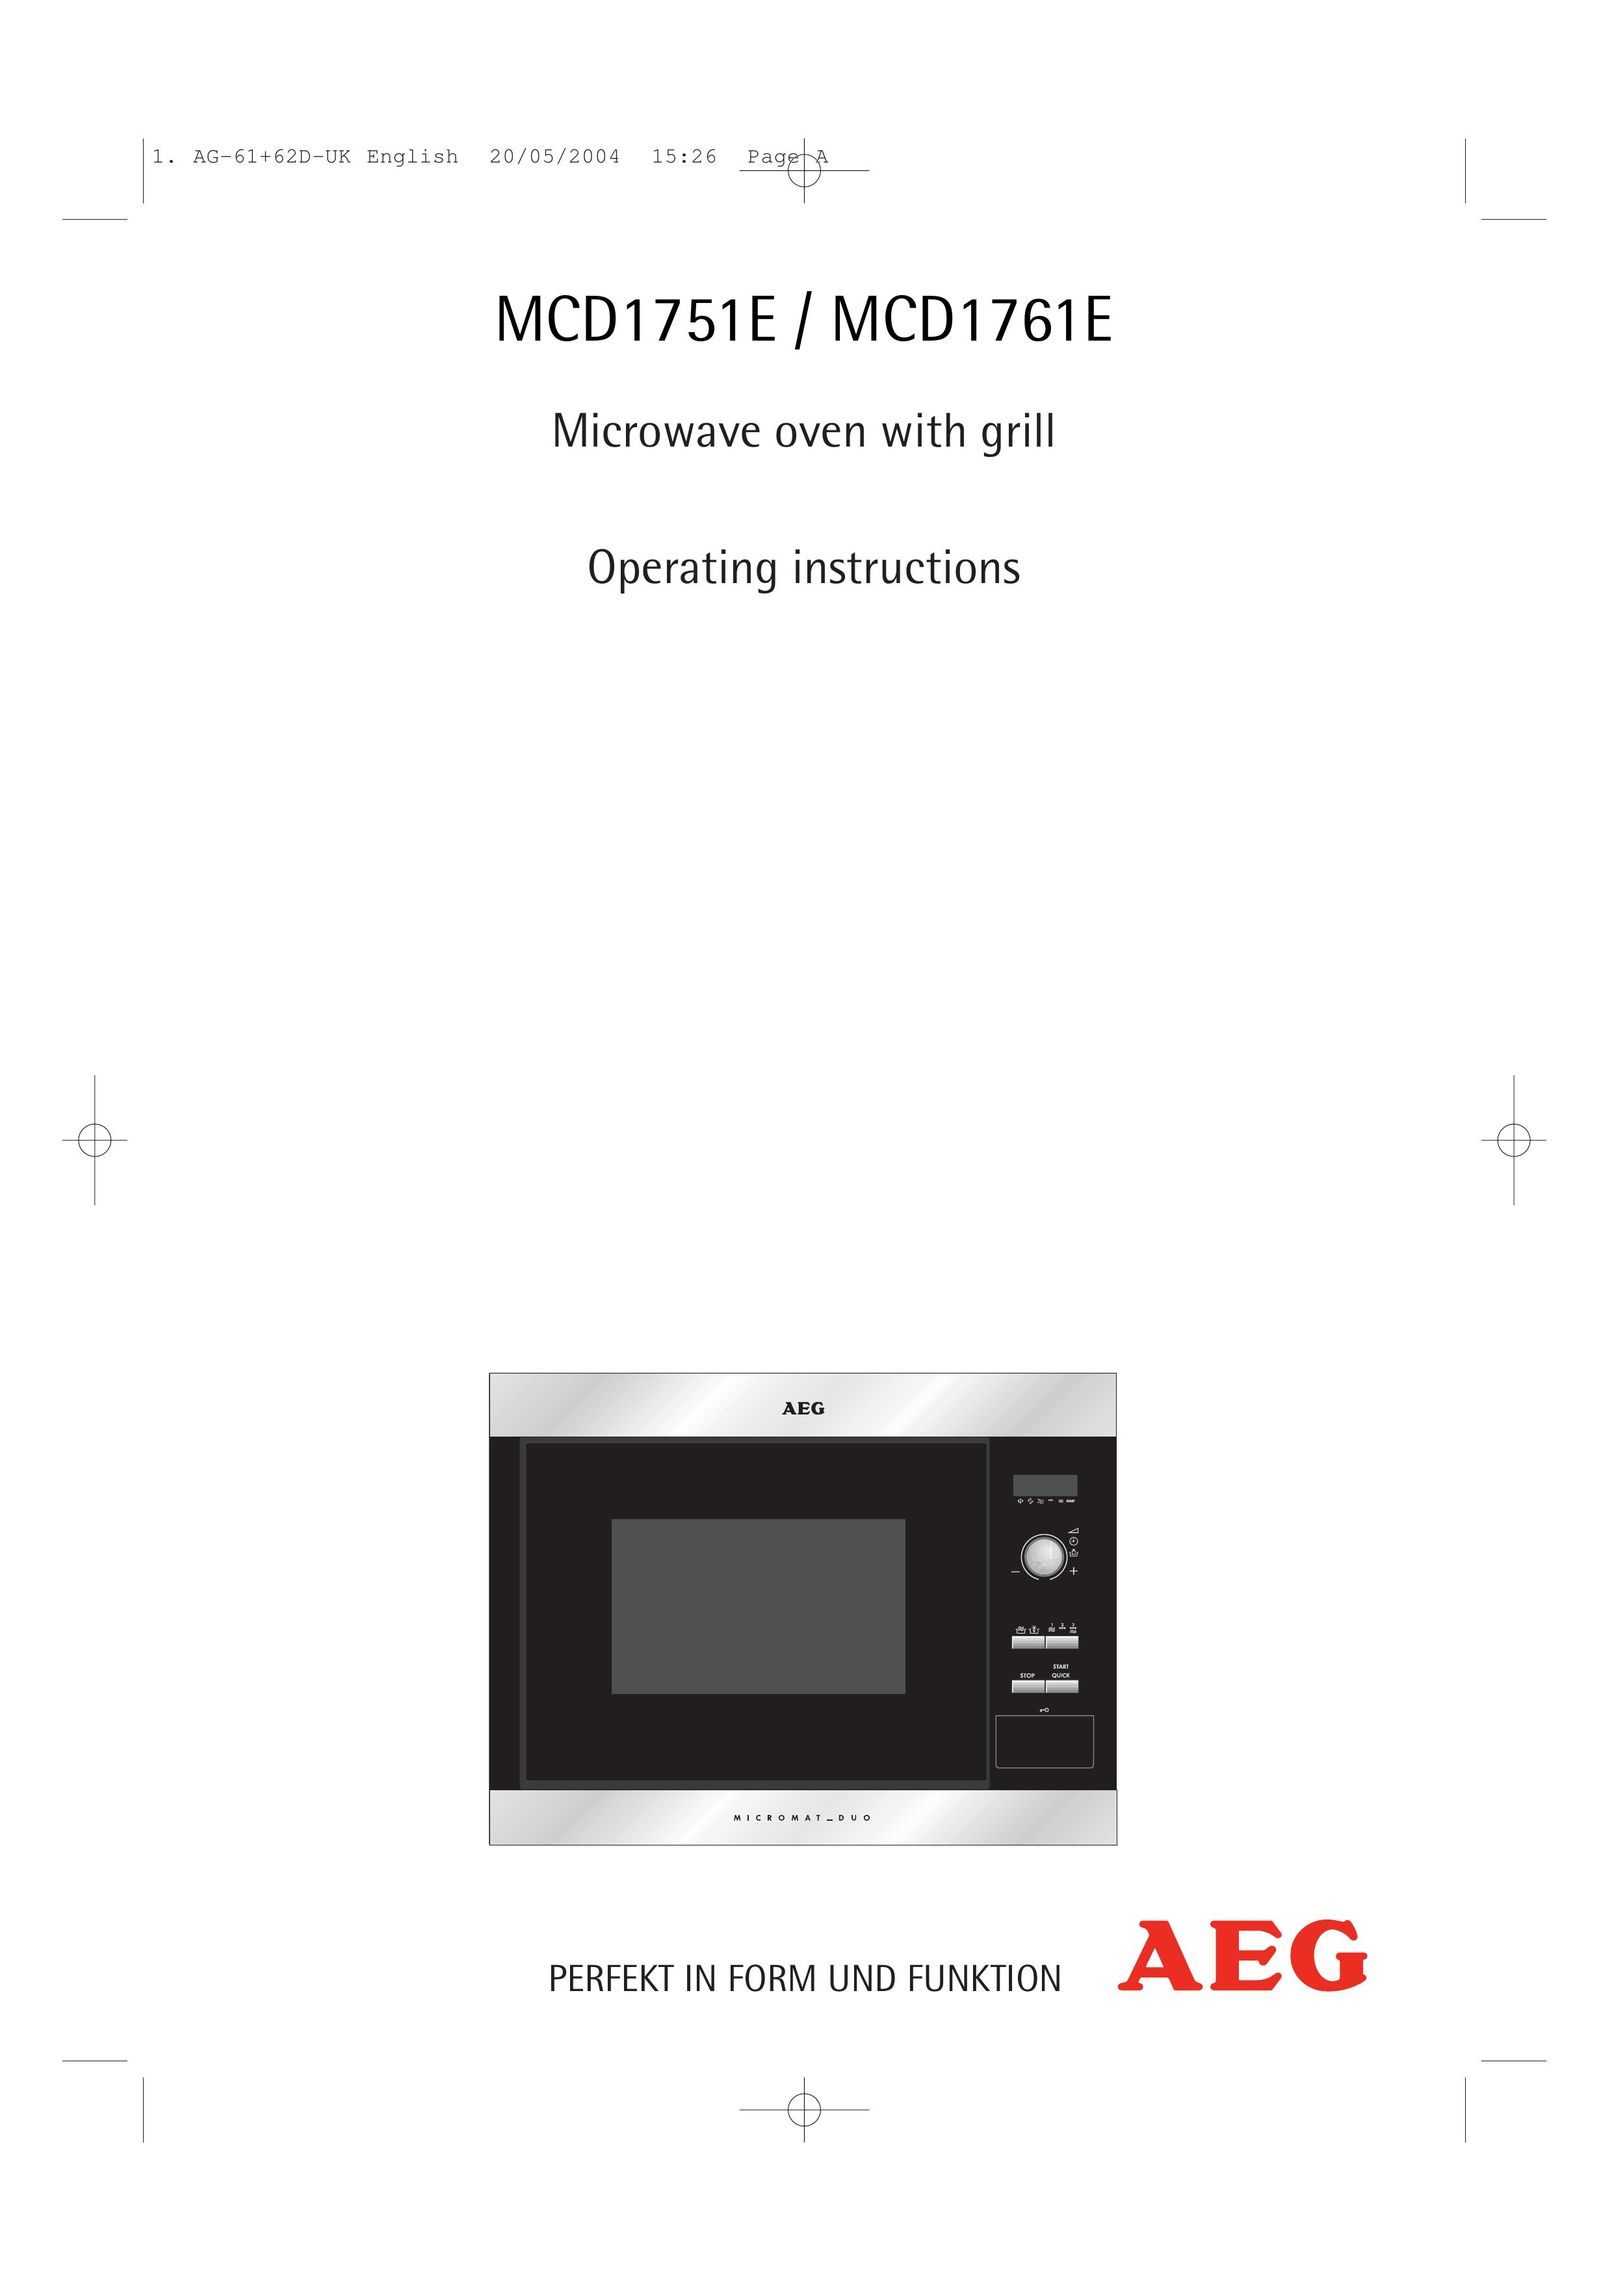 AEG MCD1761E Microwave Oven User Manual